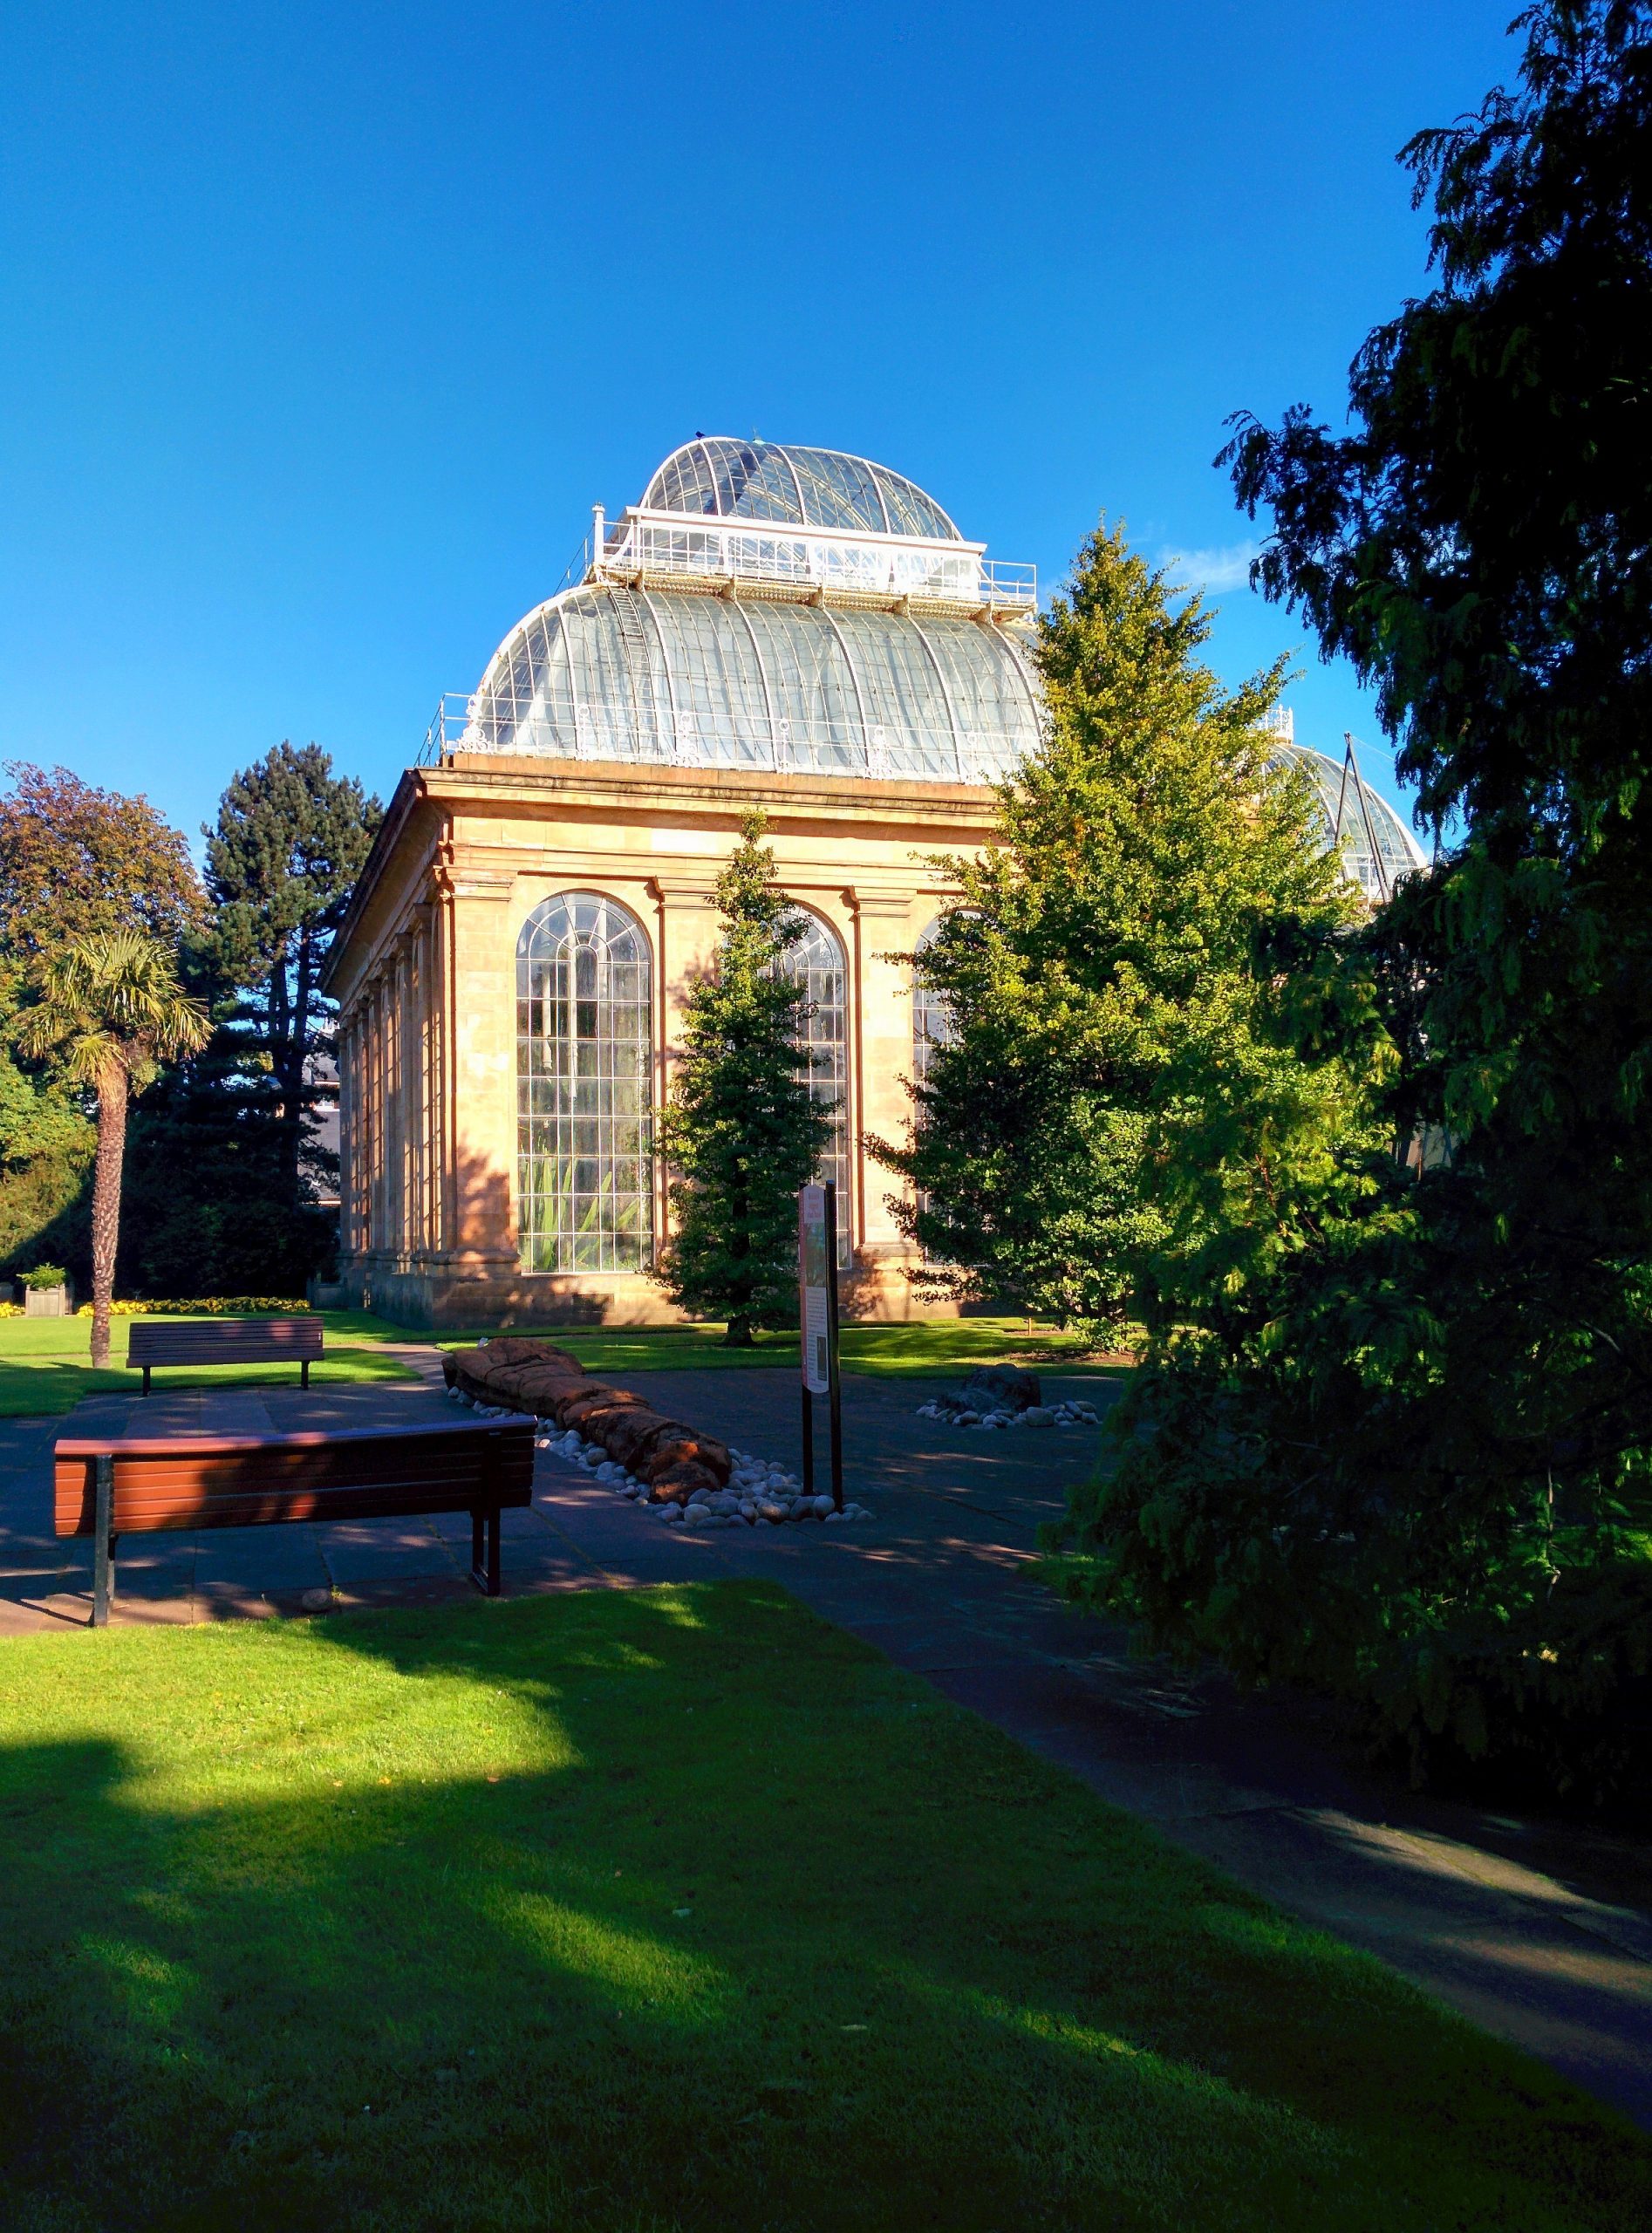 The Royal Botanic Gardens of Edinburgh 